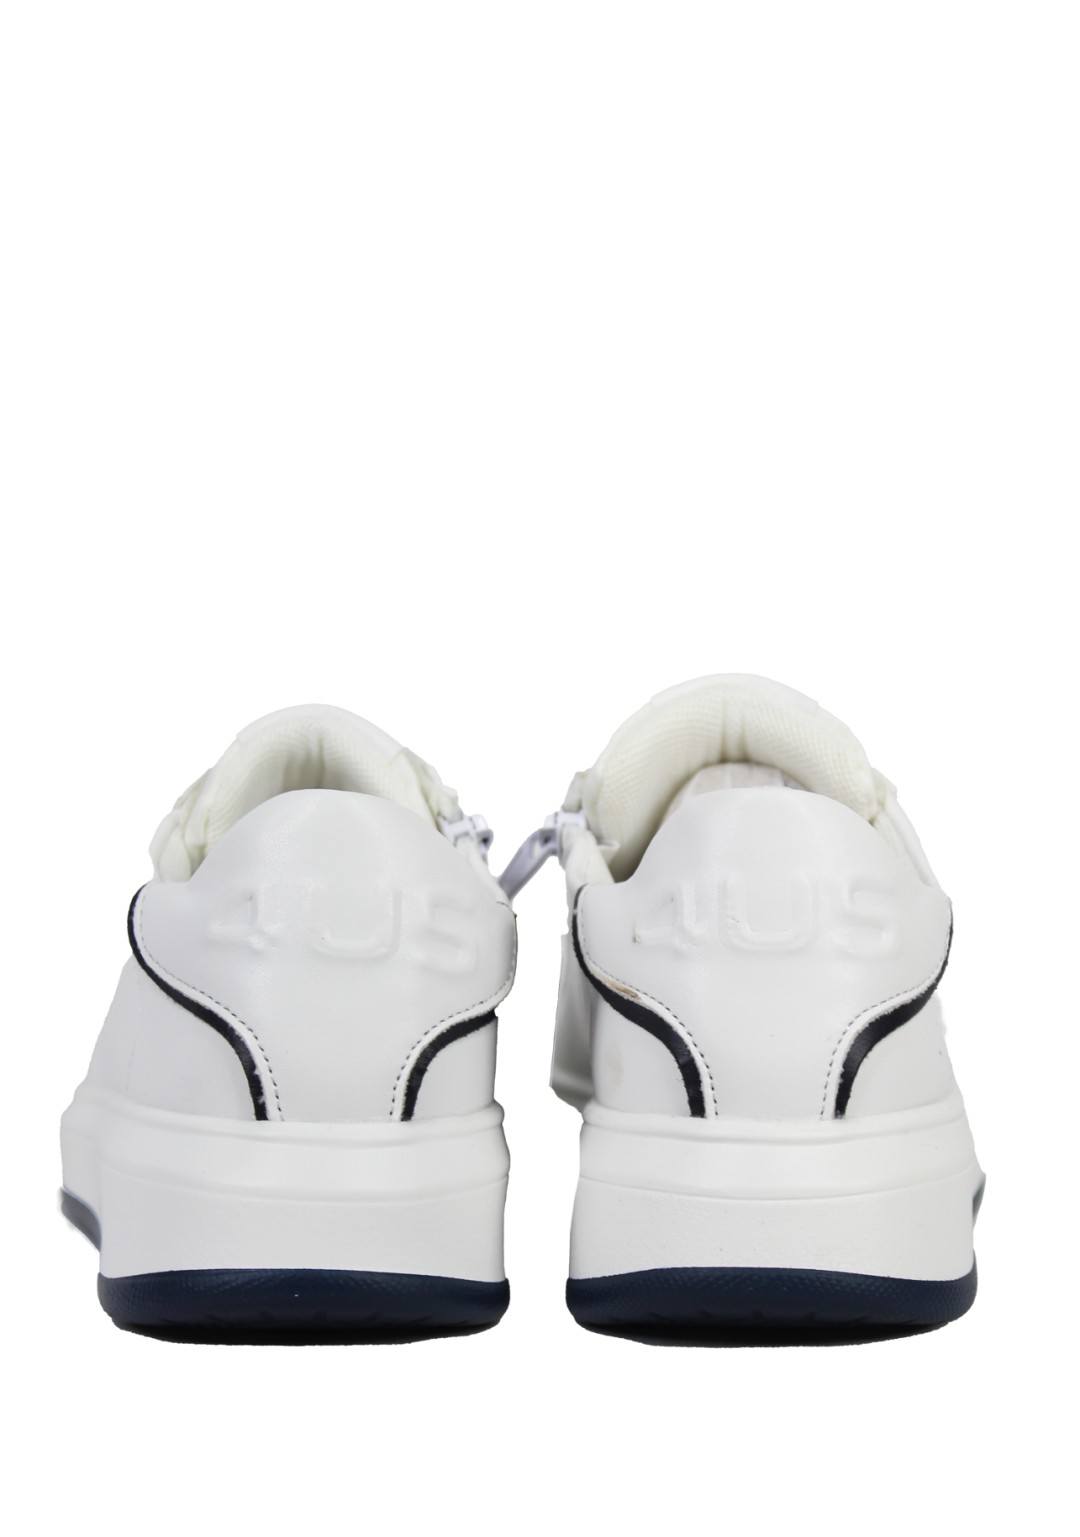 4US - Sneaker - Bambini e ragazzi - 42702 W